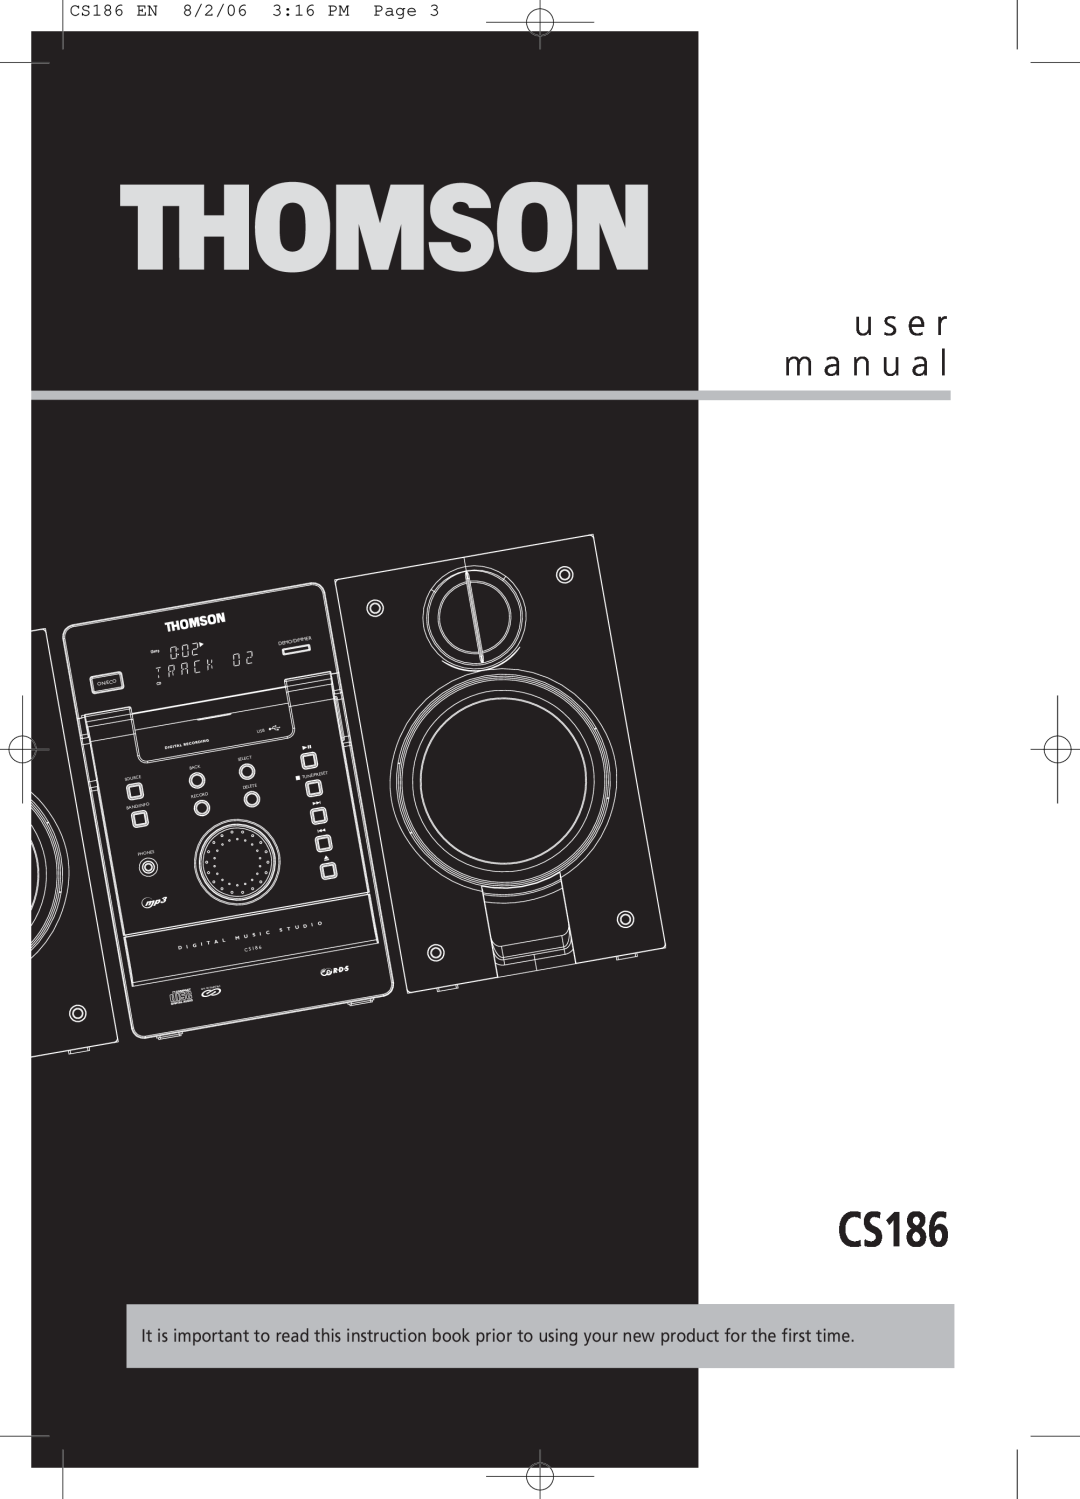 Technicolor - Thomson CS186 EN 8/2/06 316 PM Page, u s e r m a n u a l, On/Eco, Immer, Demo/D, Select, Back, Source 